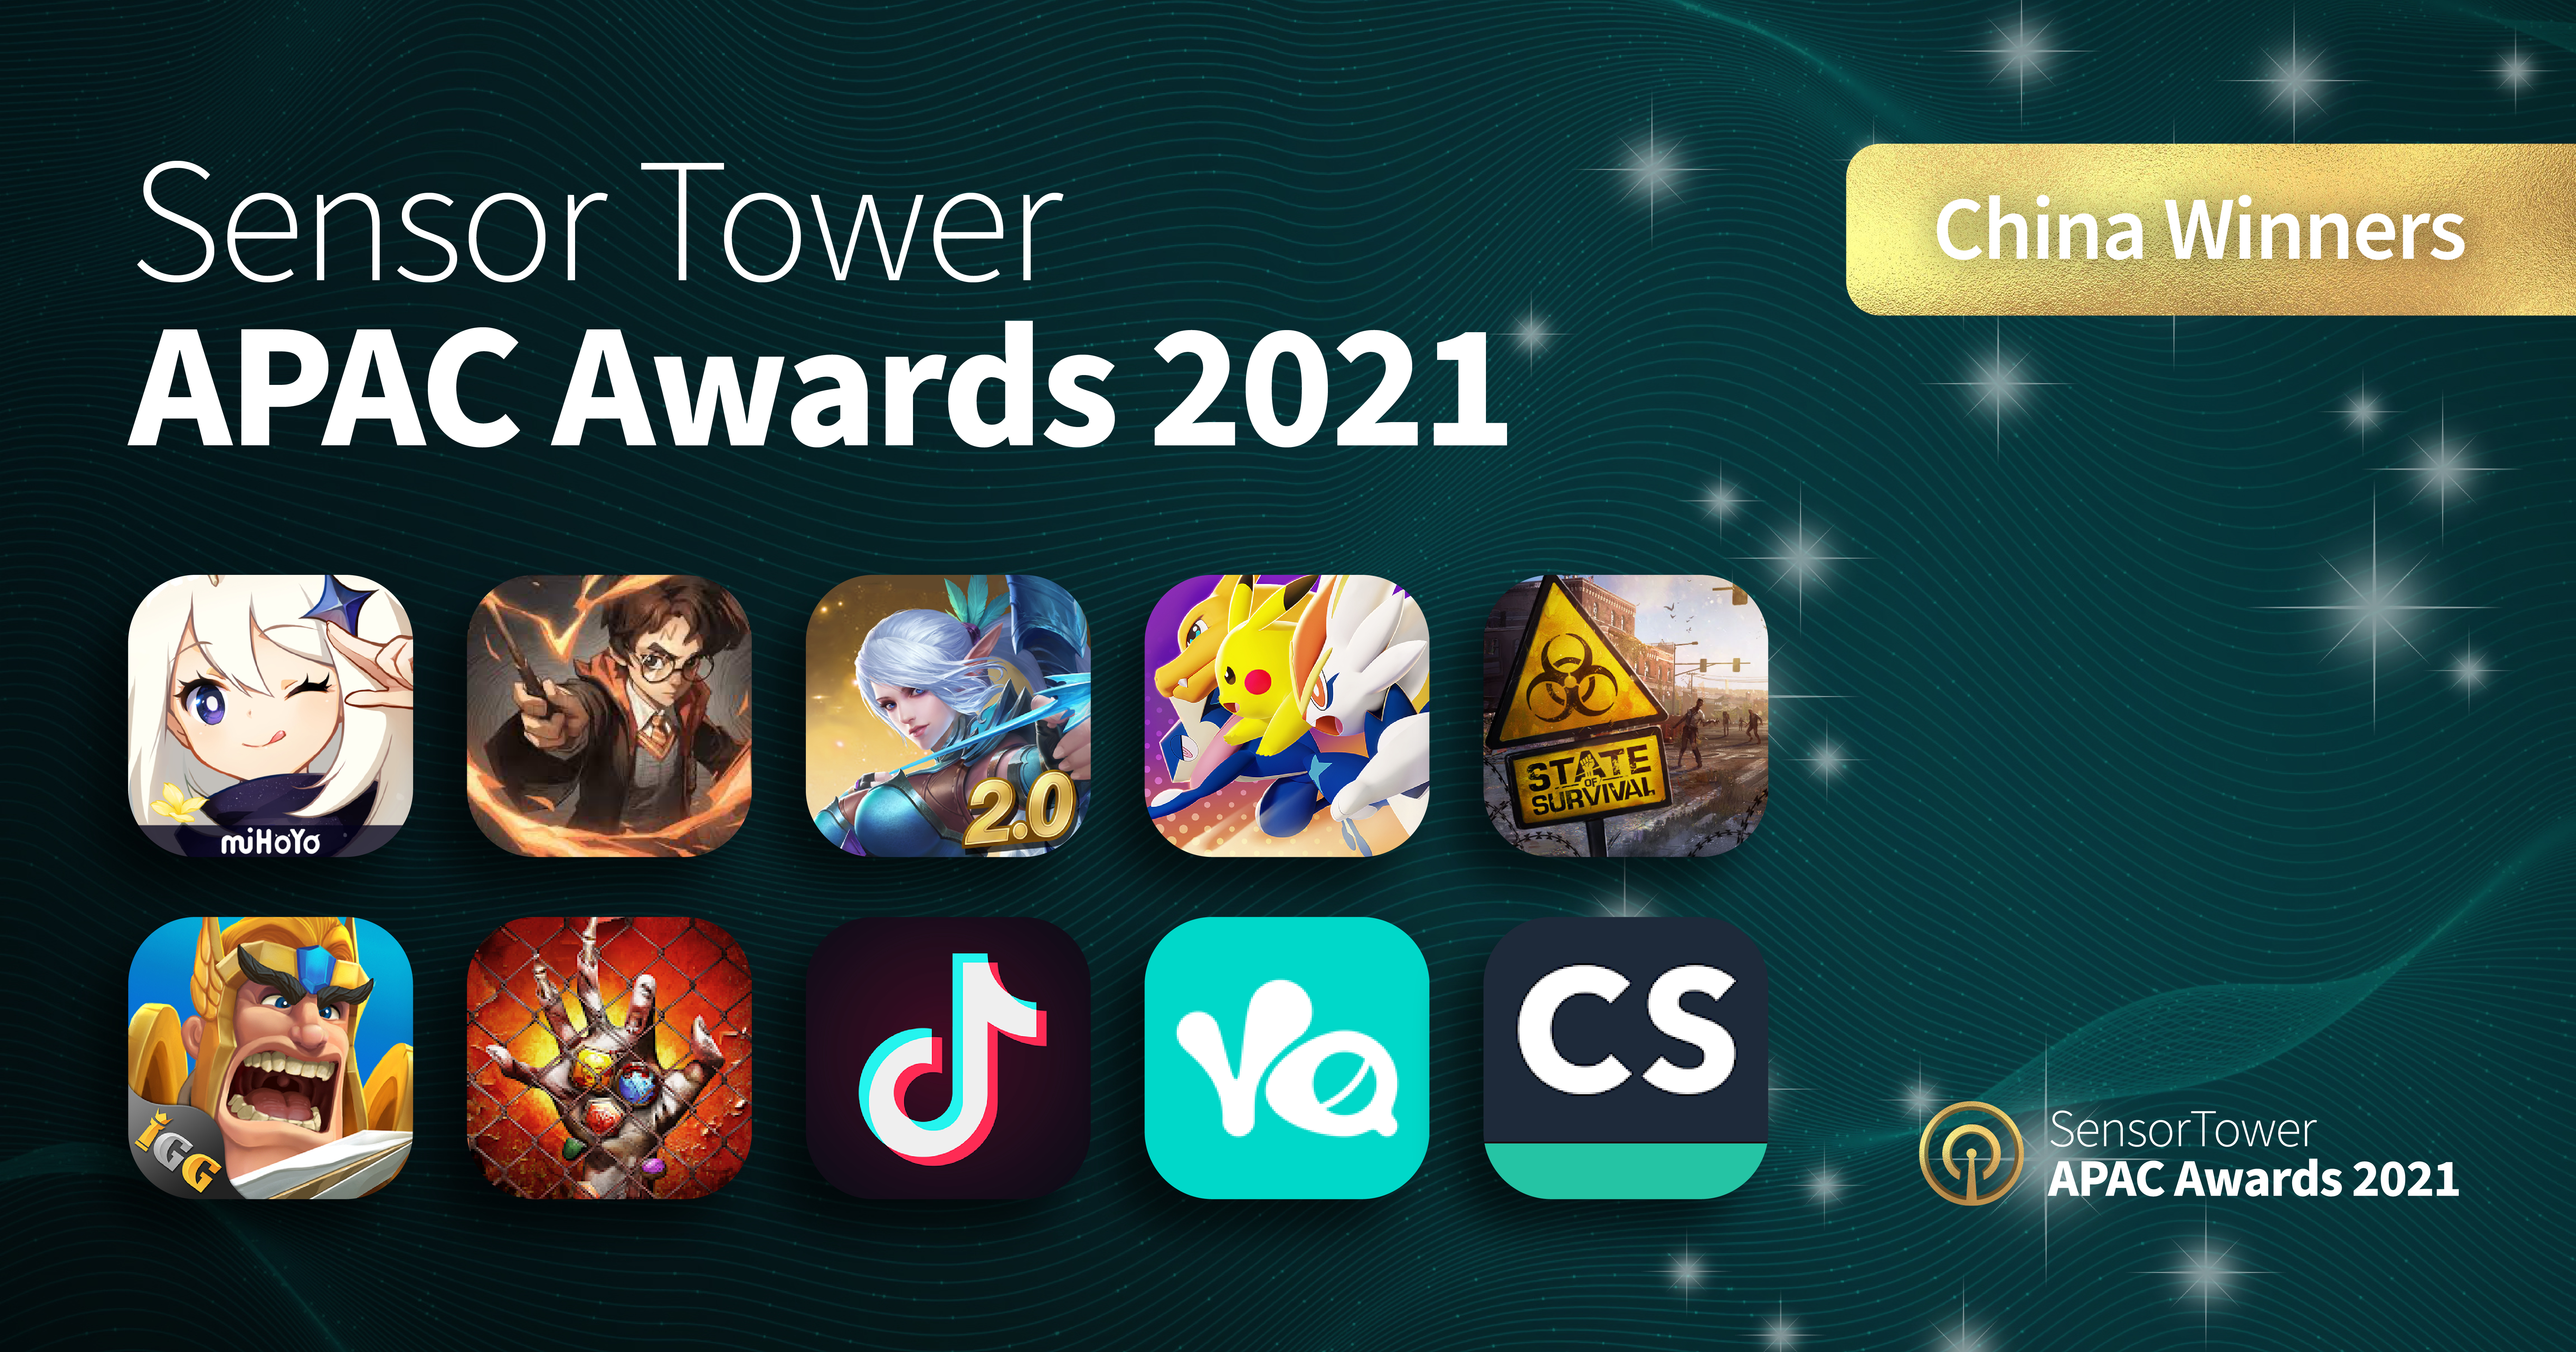 APAC Awards 2021 App China